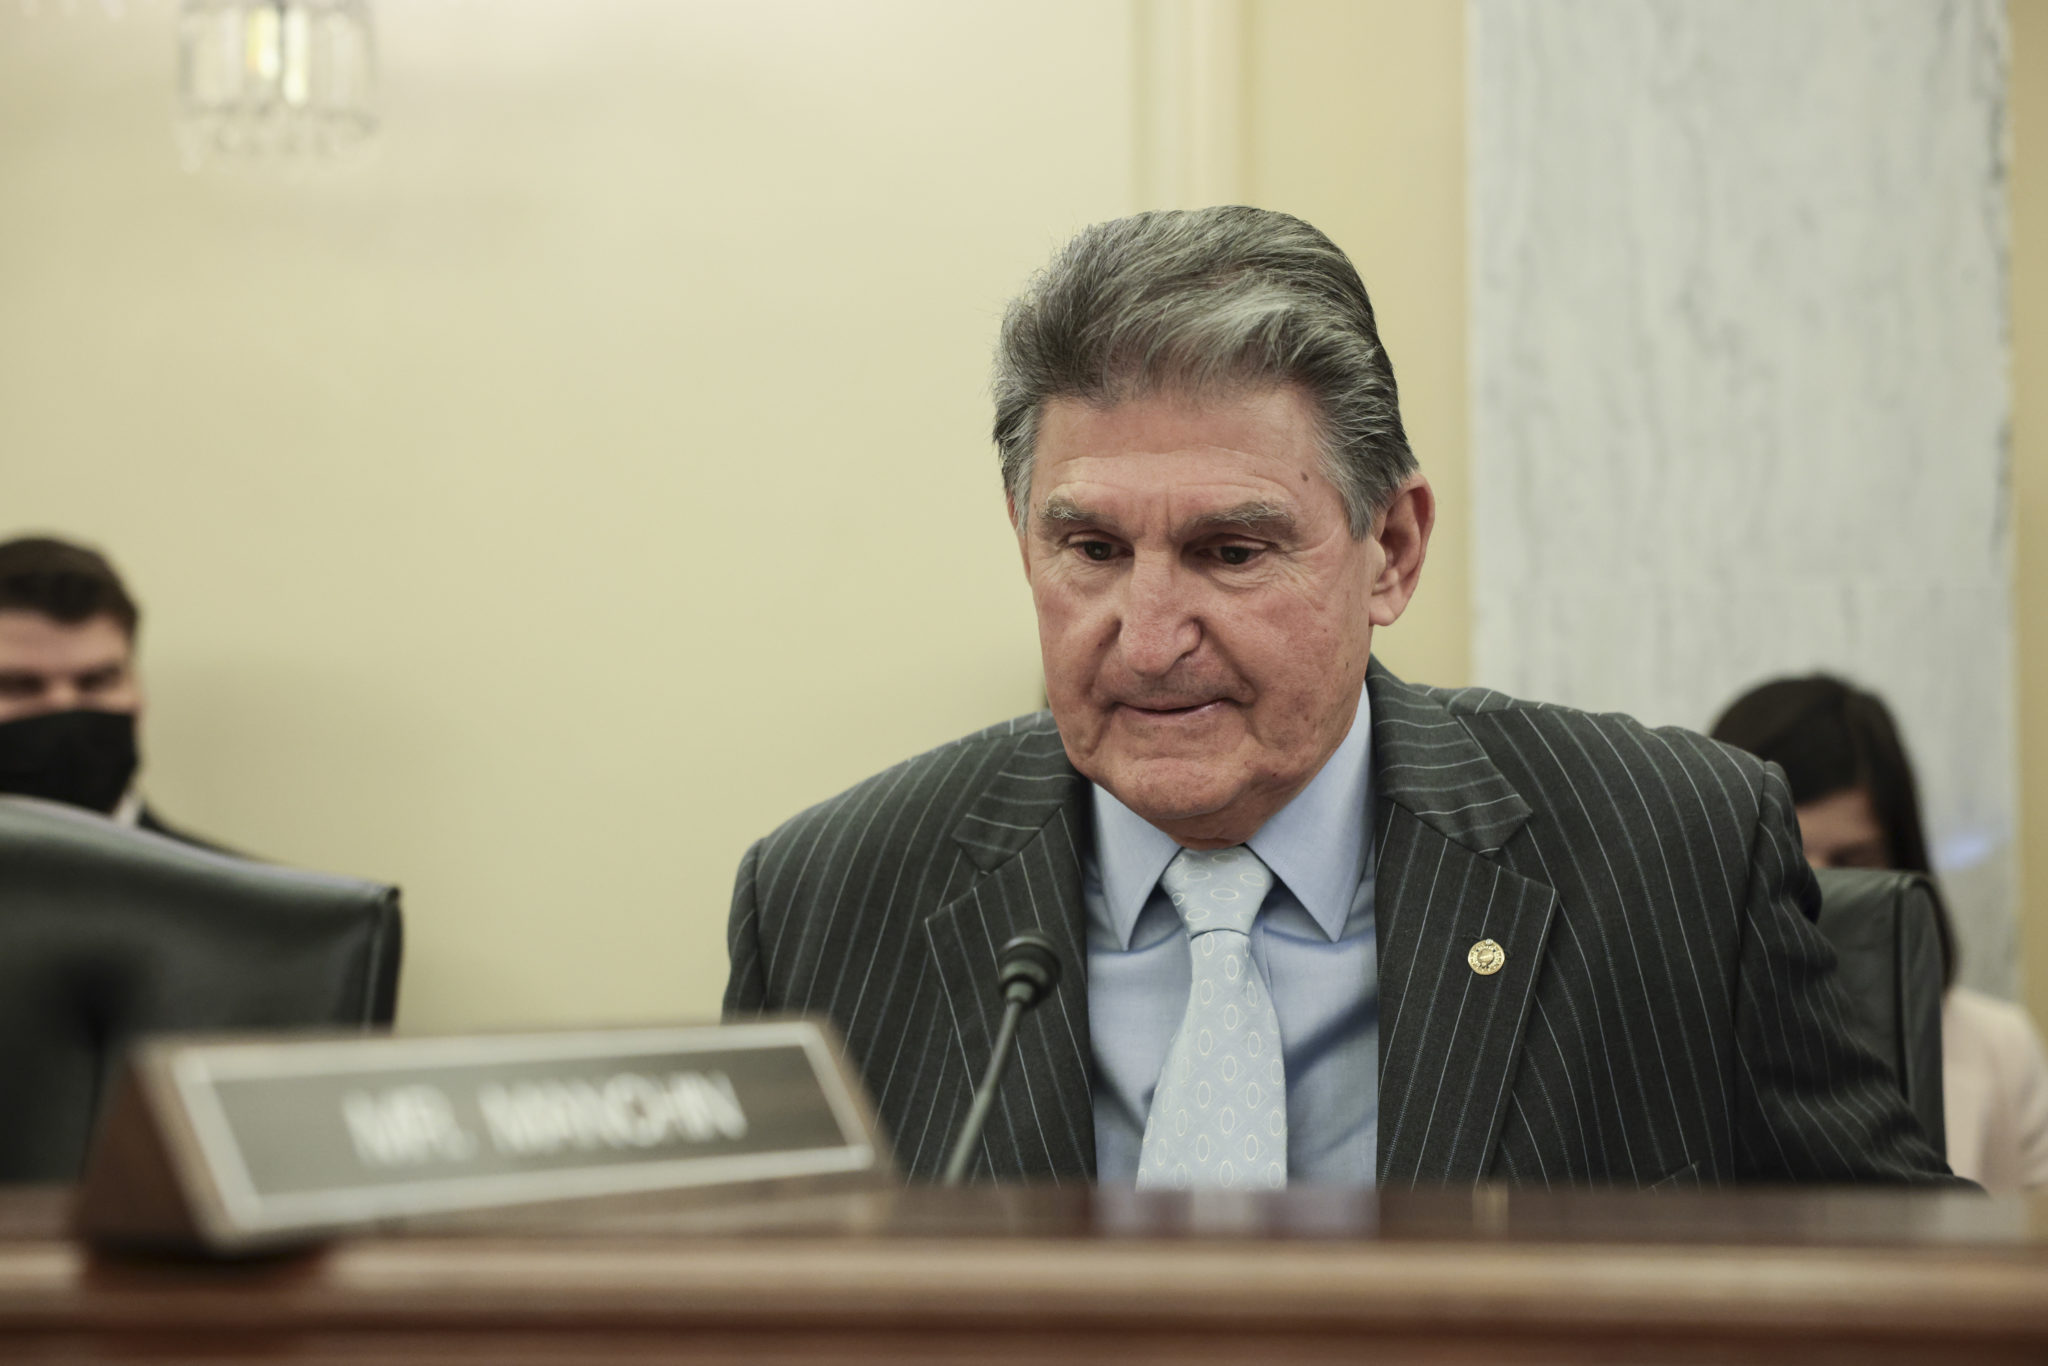 Senate Veterans' Affairs Committee Convenes For Business Meeting